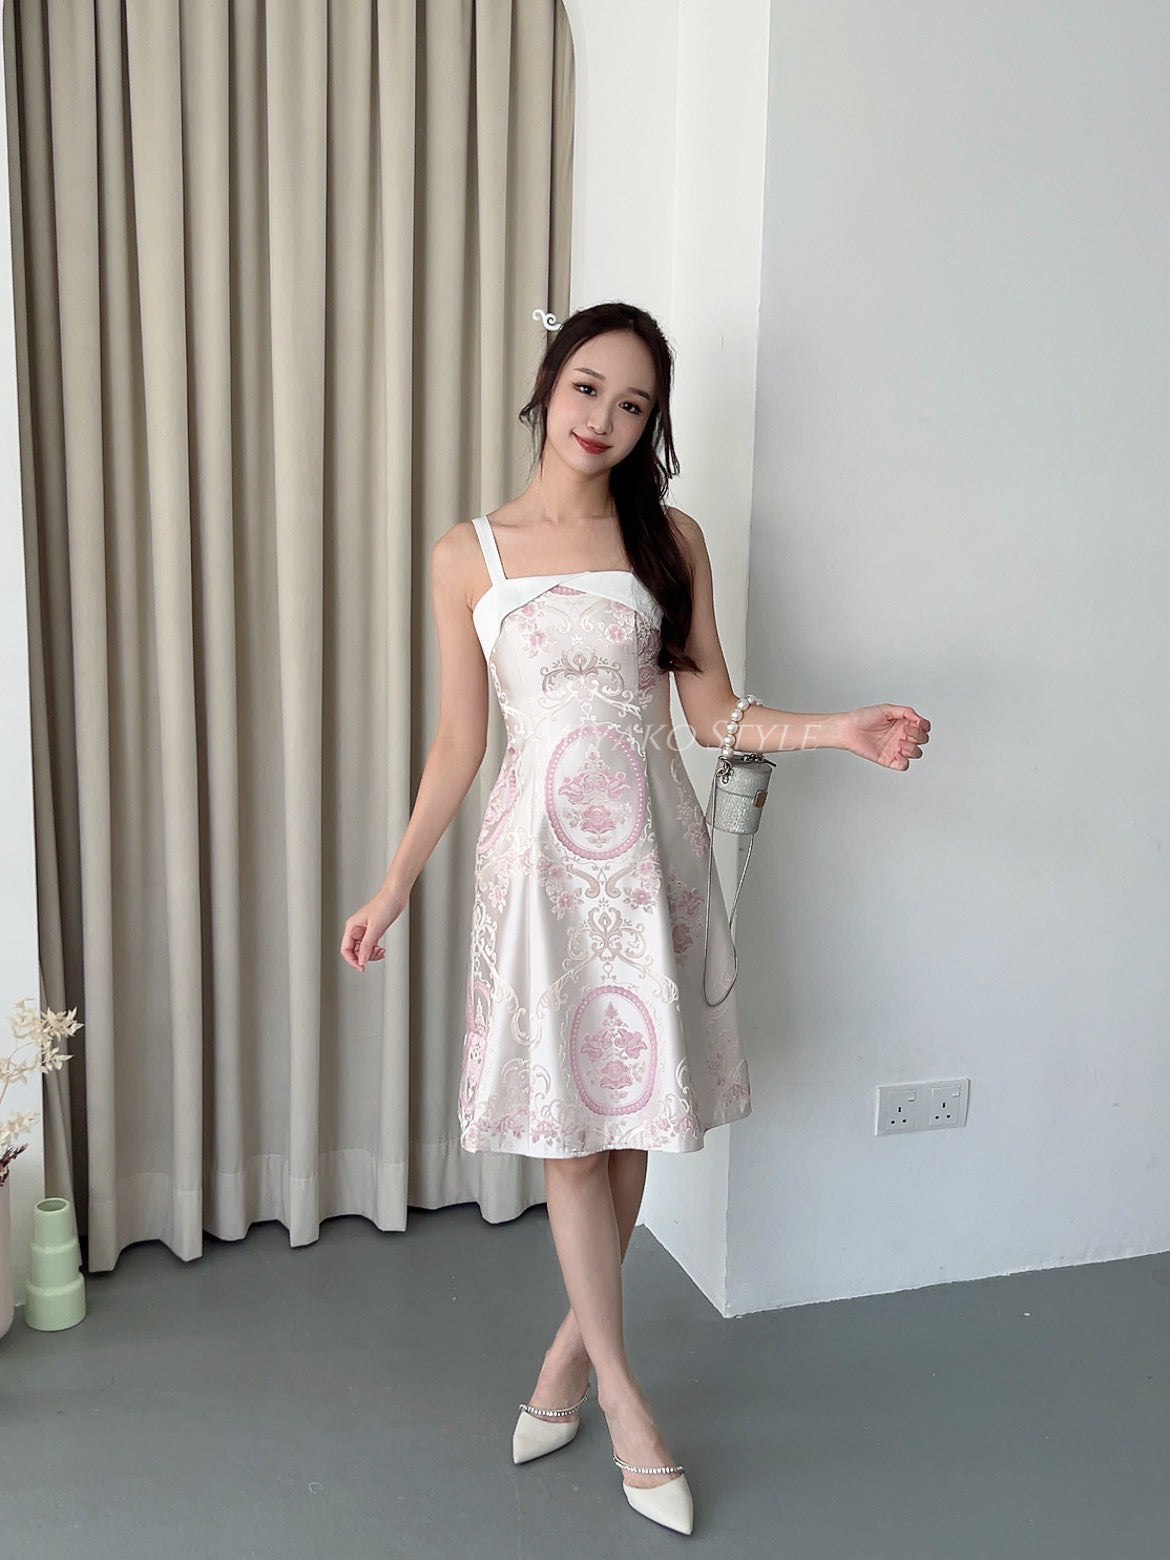 【宫廷】Gong Premium Cheongsam Women Dress in Pink (粉色女连衣裙)